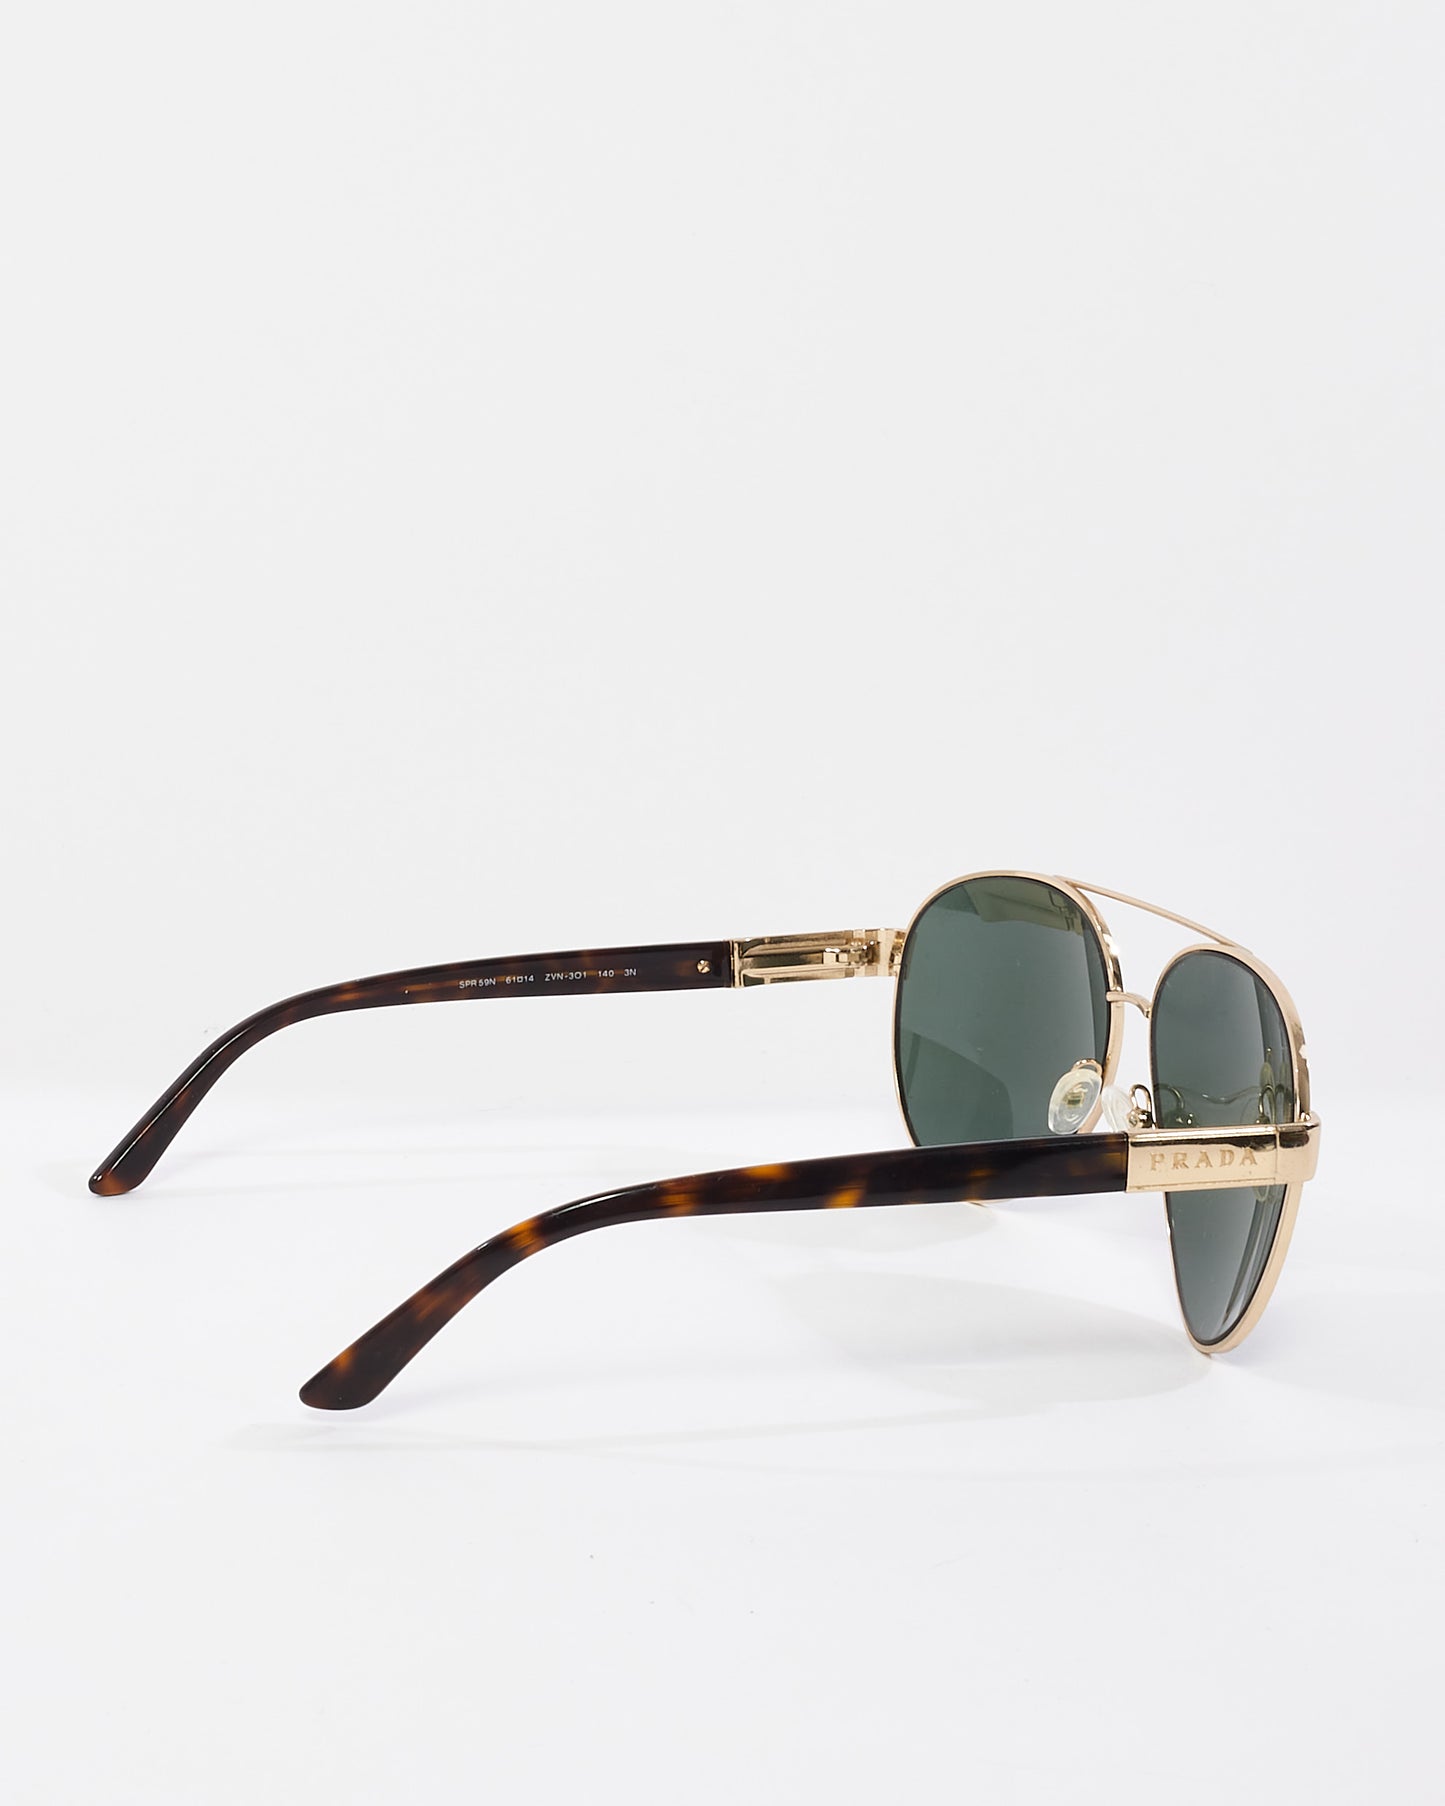 Prada Gold & Tortoise Aviator Sunglasses SPR 59N